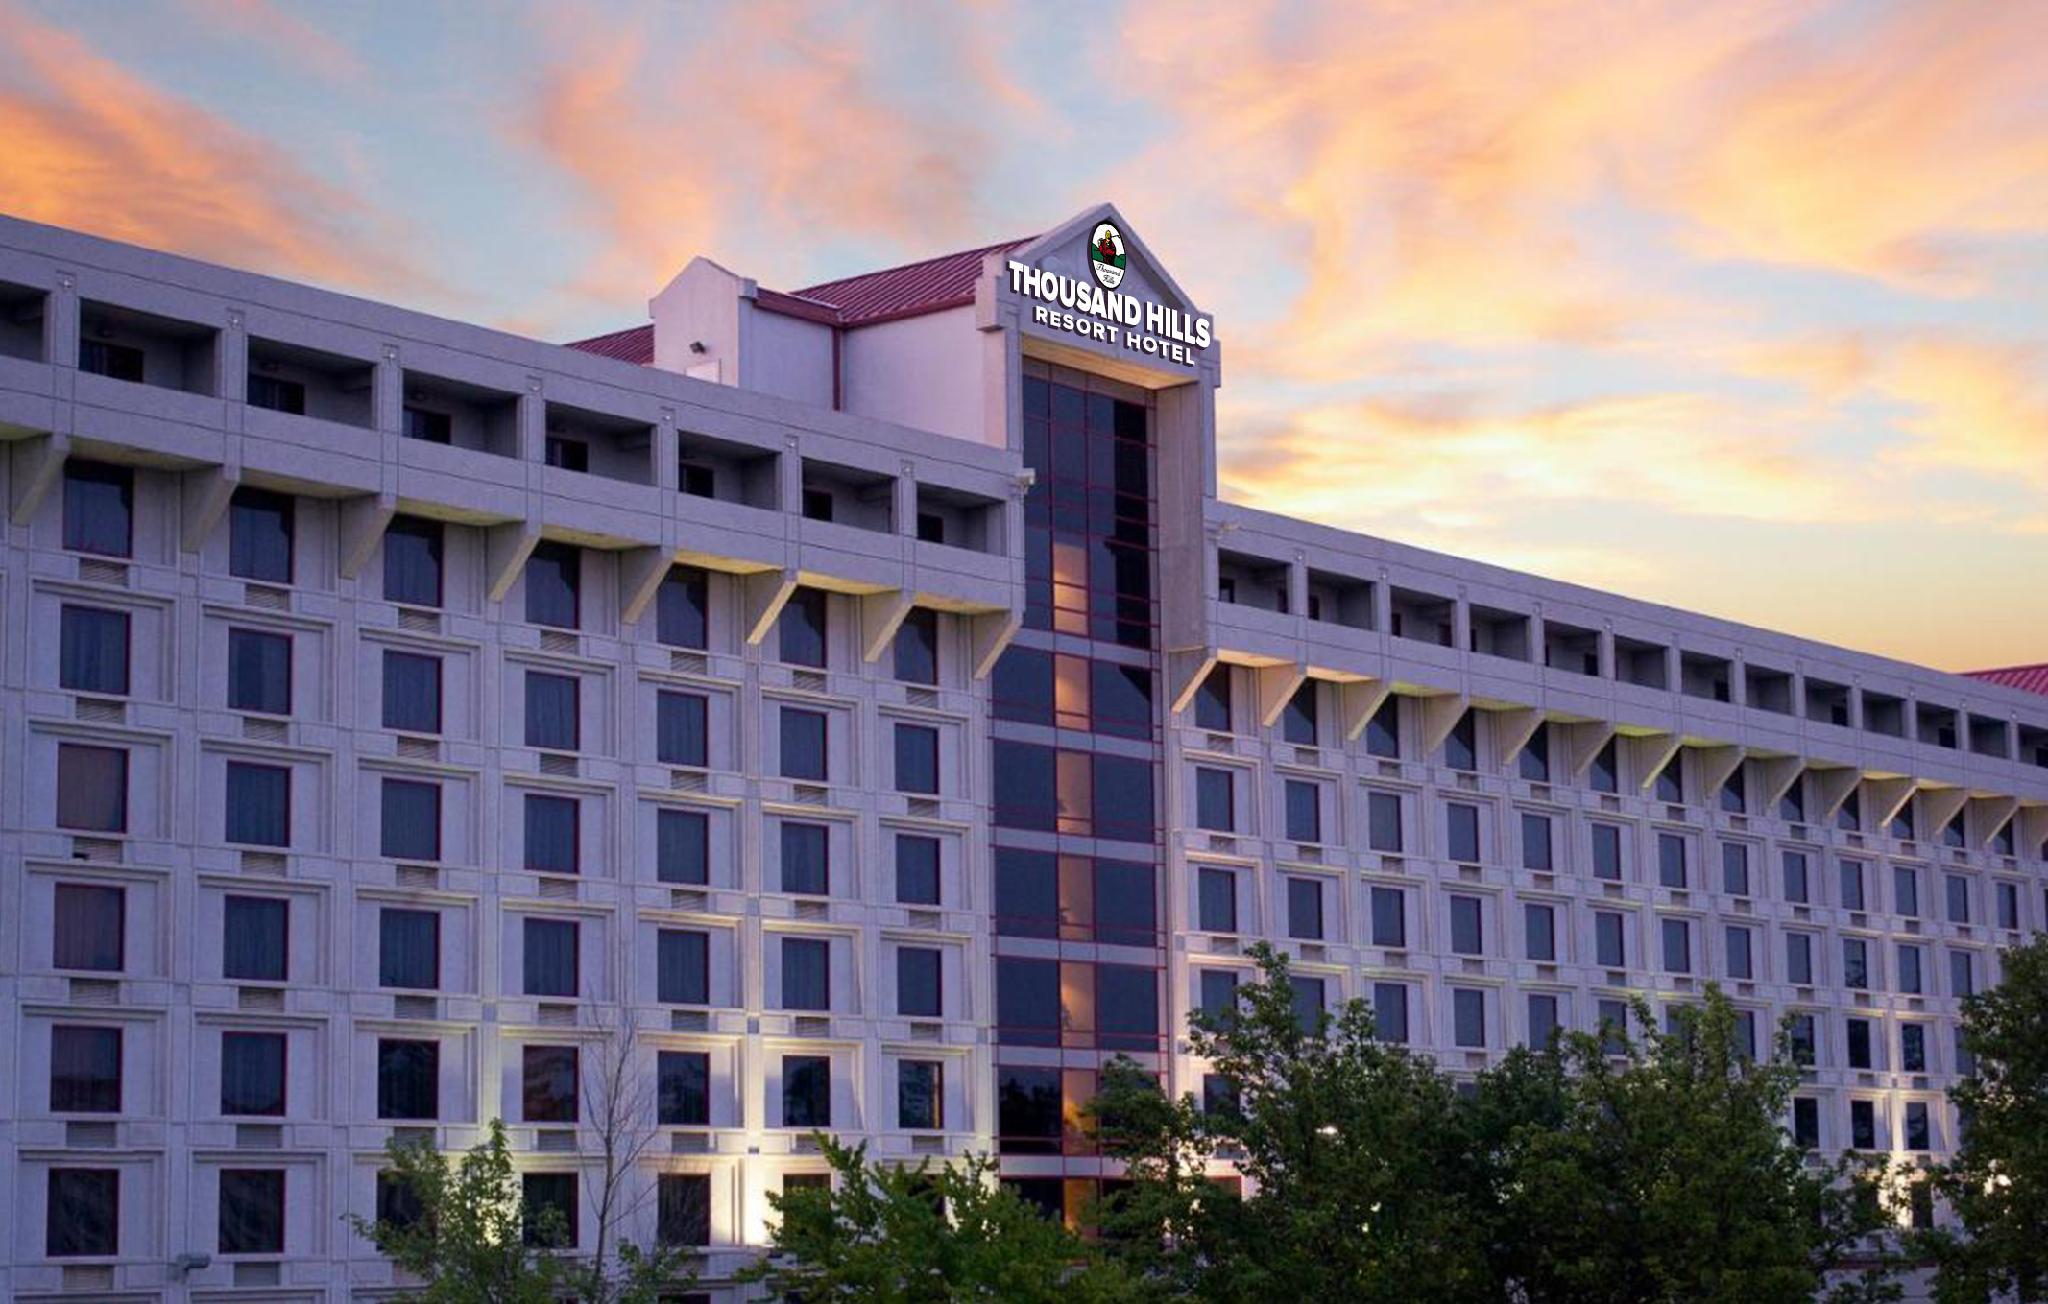 Thousand Hills Resort Hotel - Branson